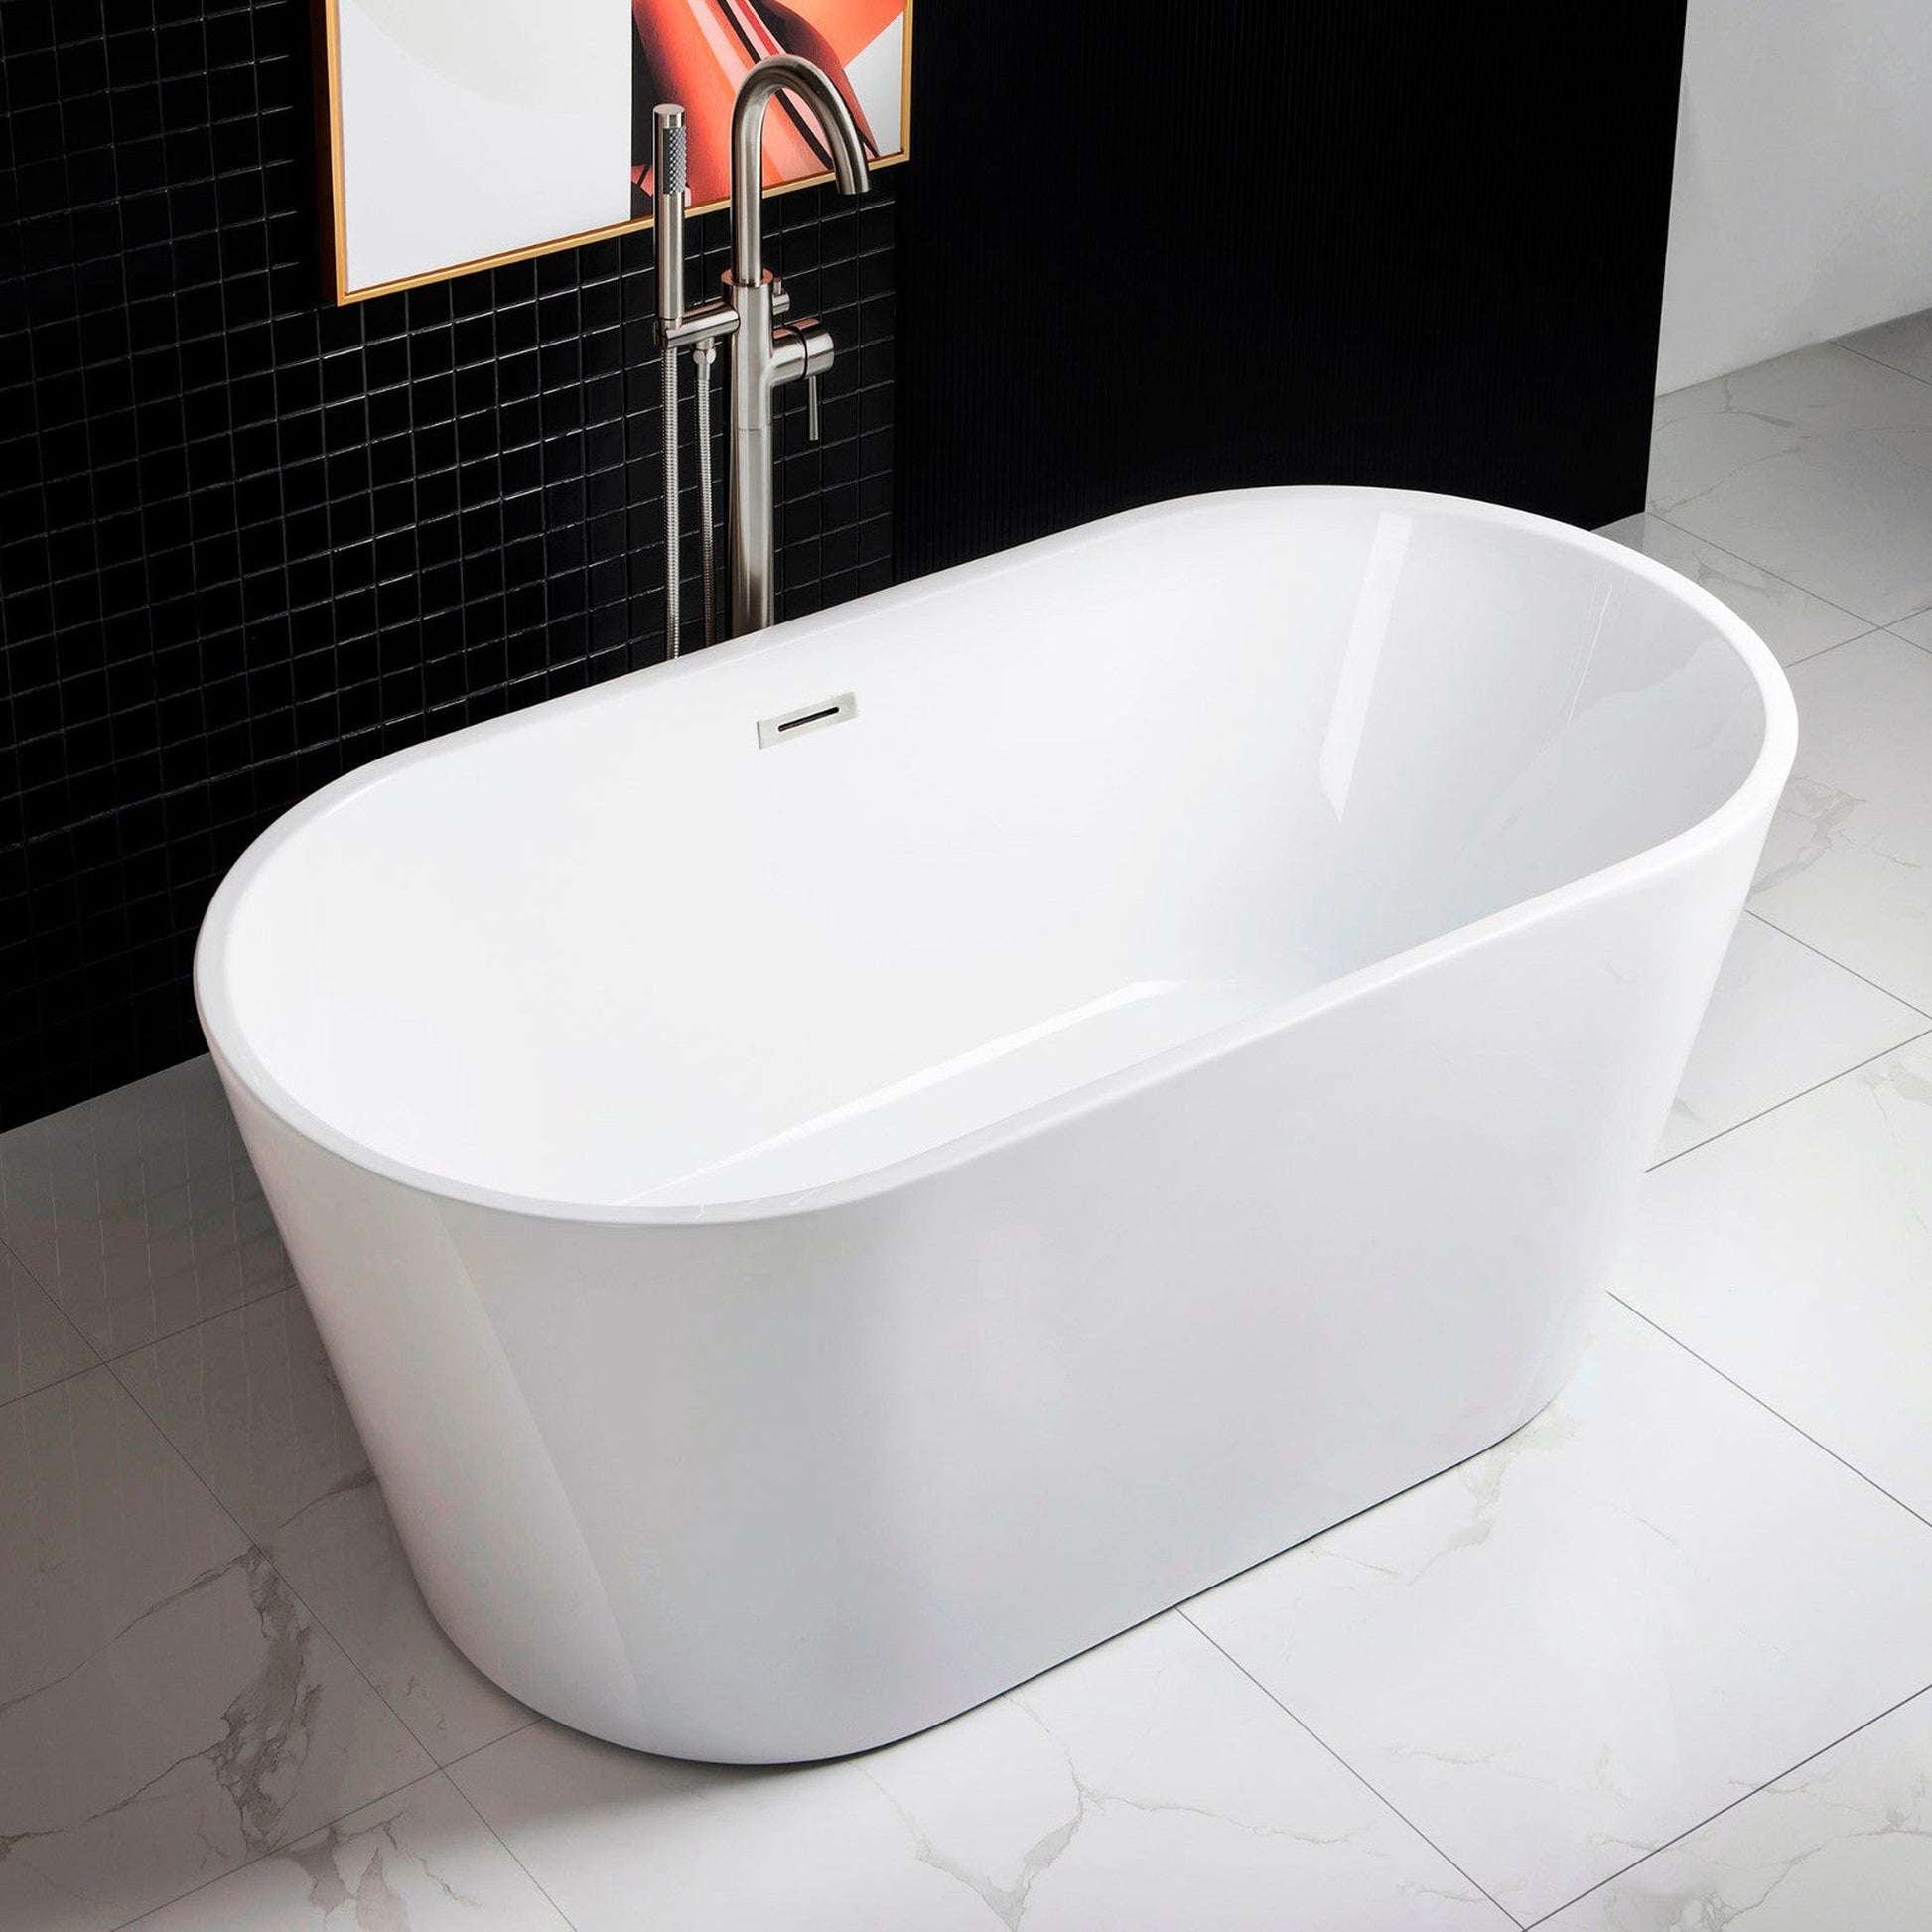 WoodBridge B0014 59" White Acrylic Freestanding Soaking Bathtub With Brushed Nickel Drain, Overflow, F0023BNRD Tub Filler and Caddy Tray